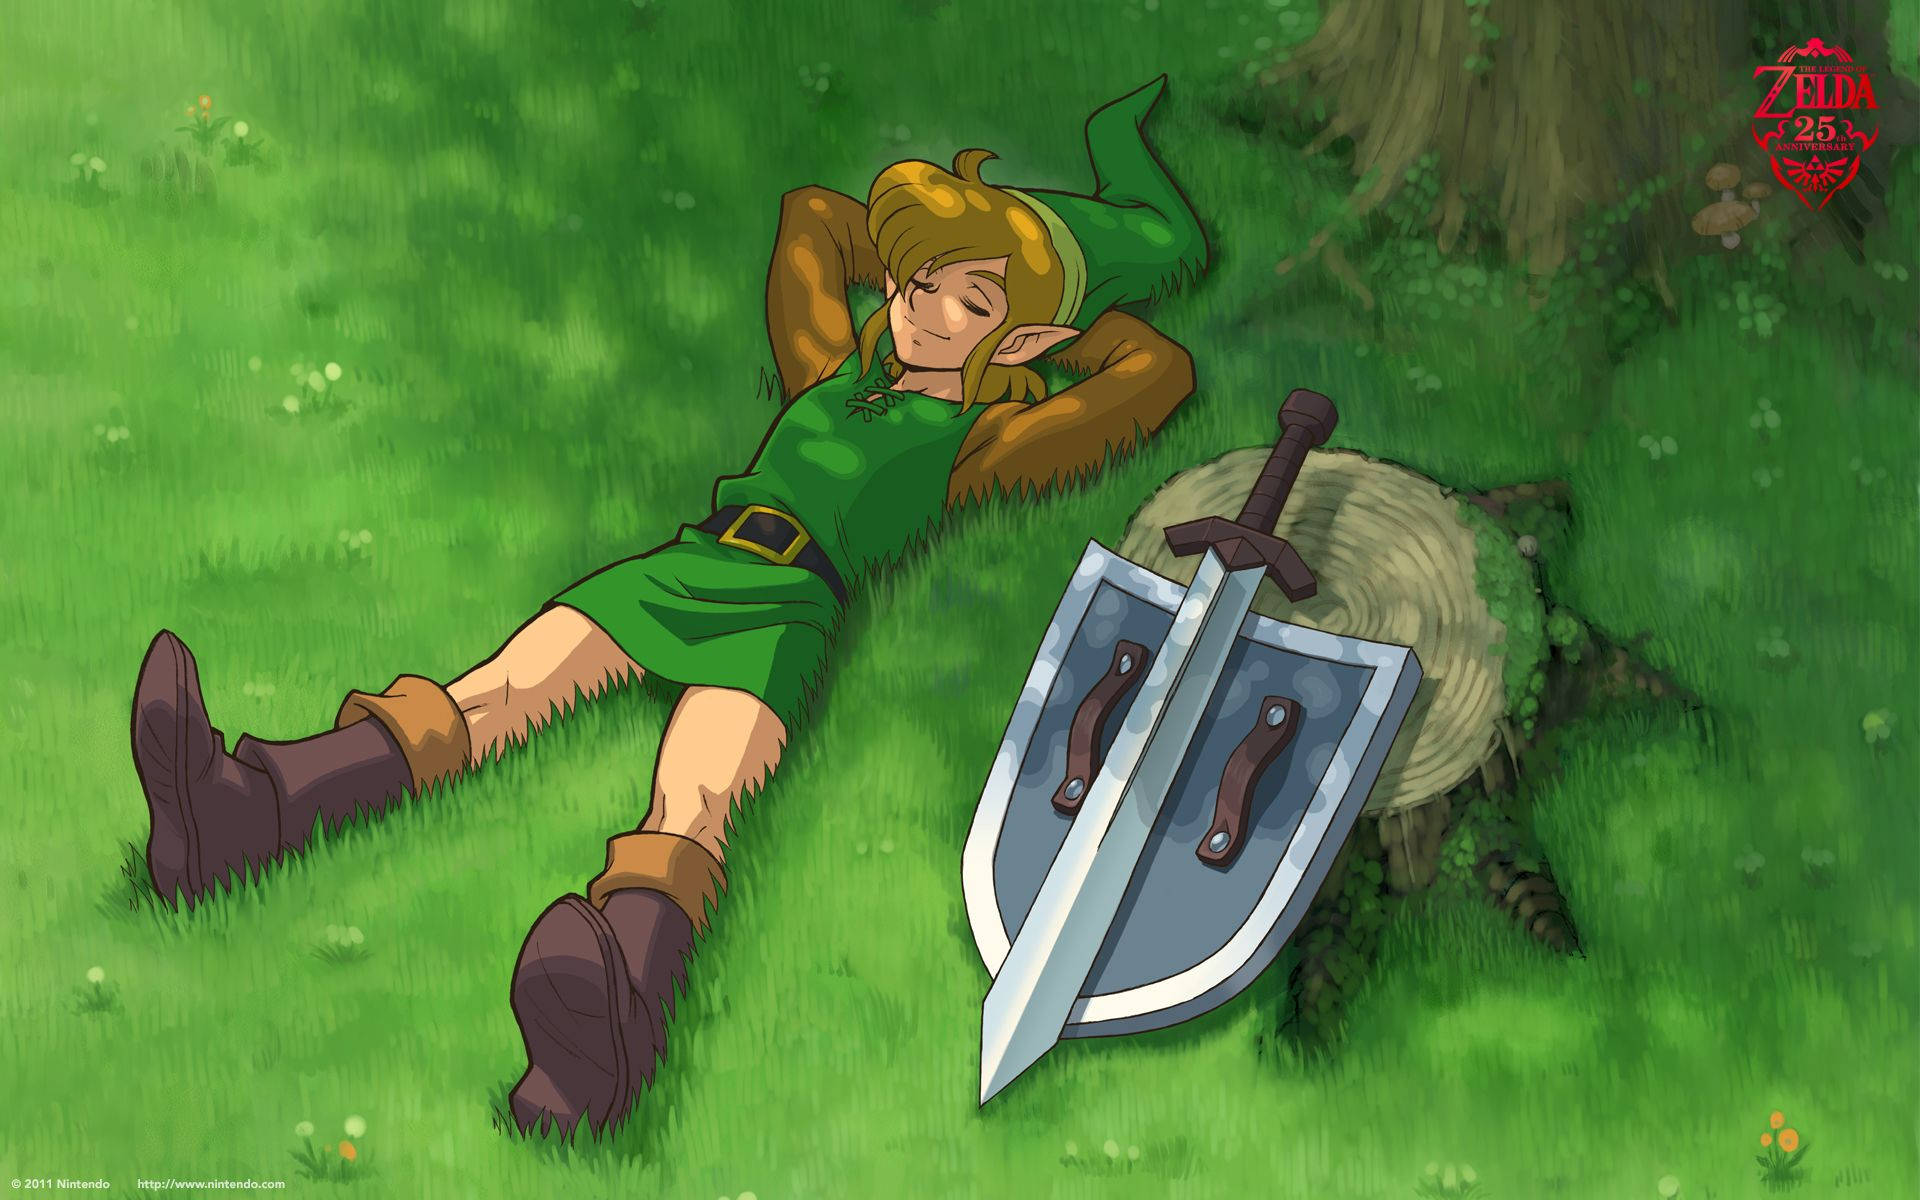 25th Anniversary Wallpaper - The Legend Of Zelda Wallpaper